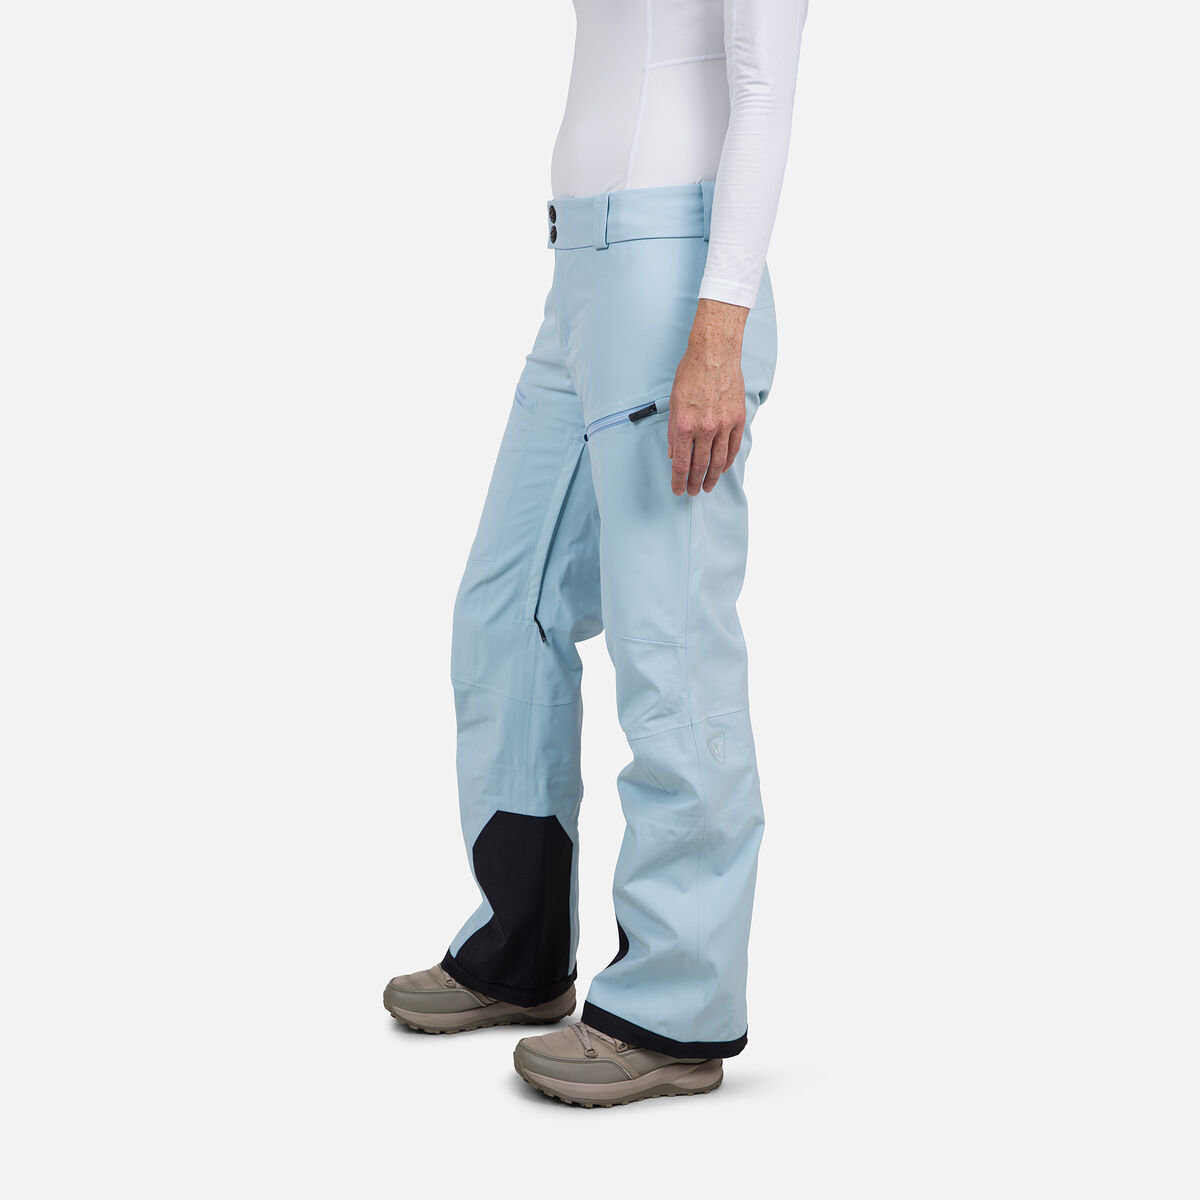 Rossignol Pantalon de ski SKPR 3 couches Ayr femme blue